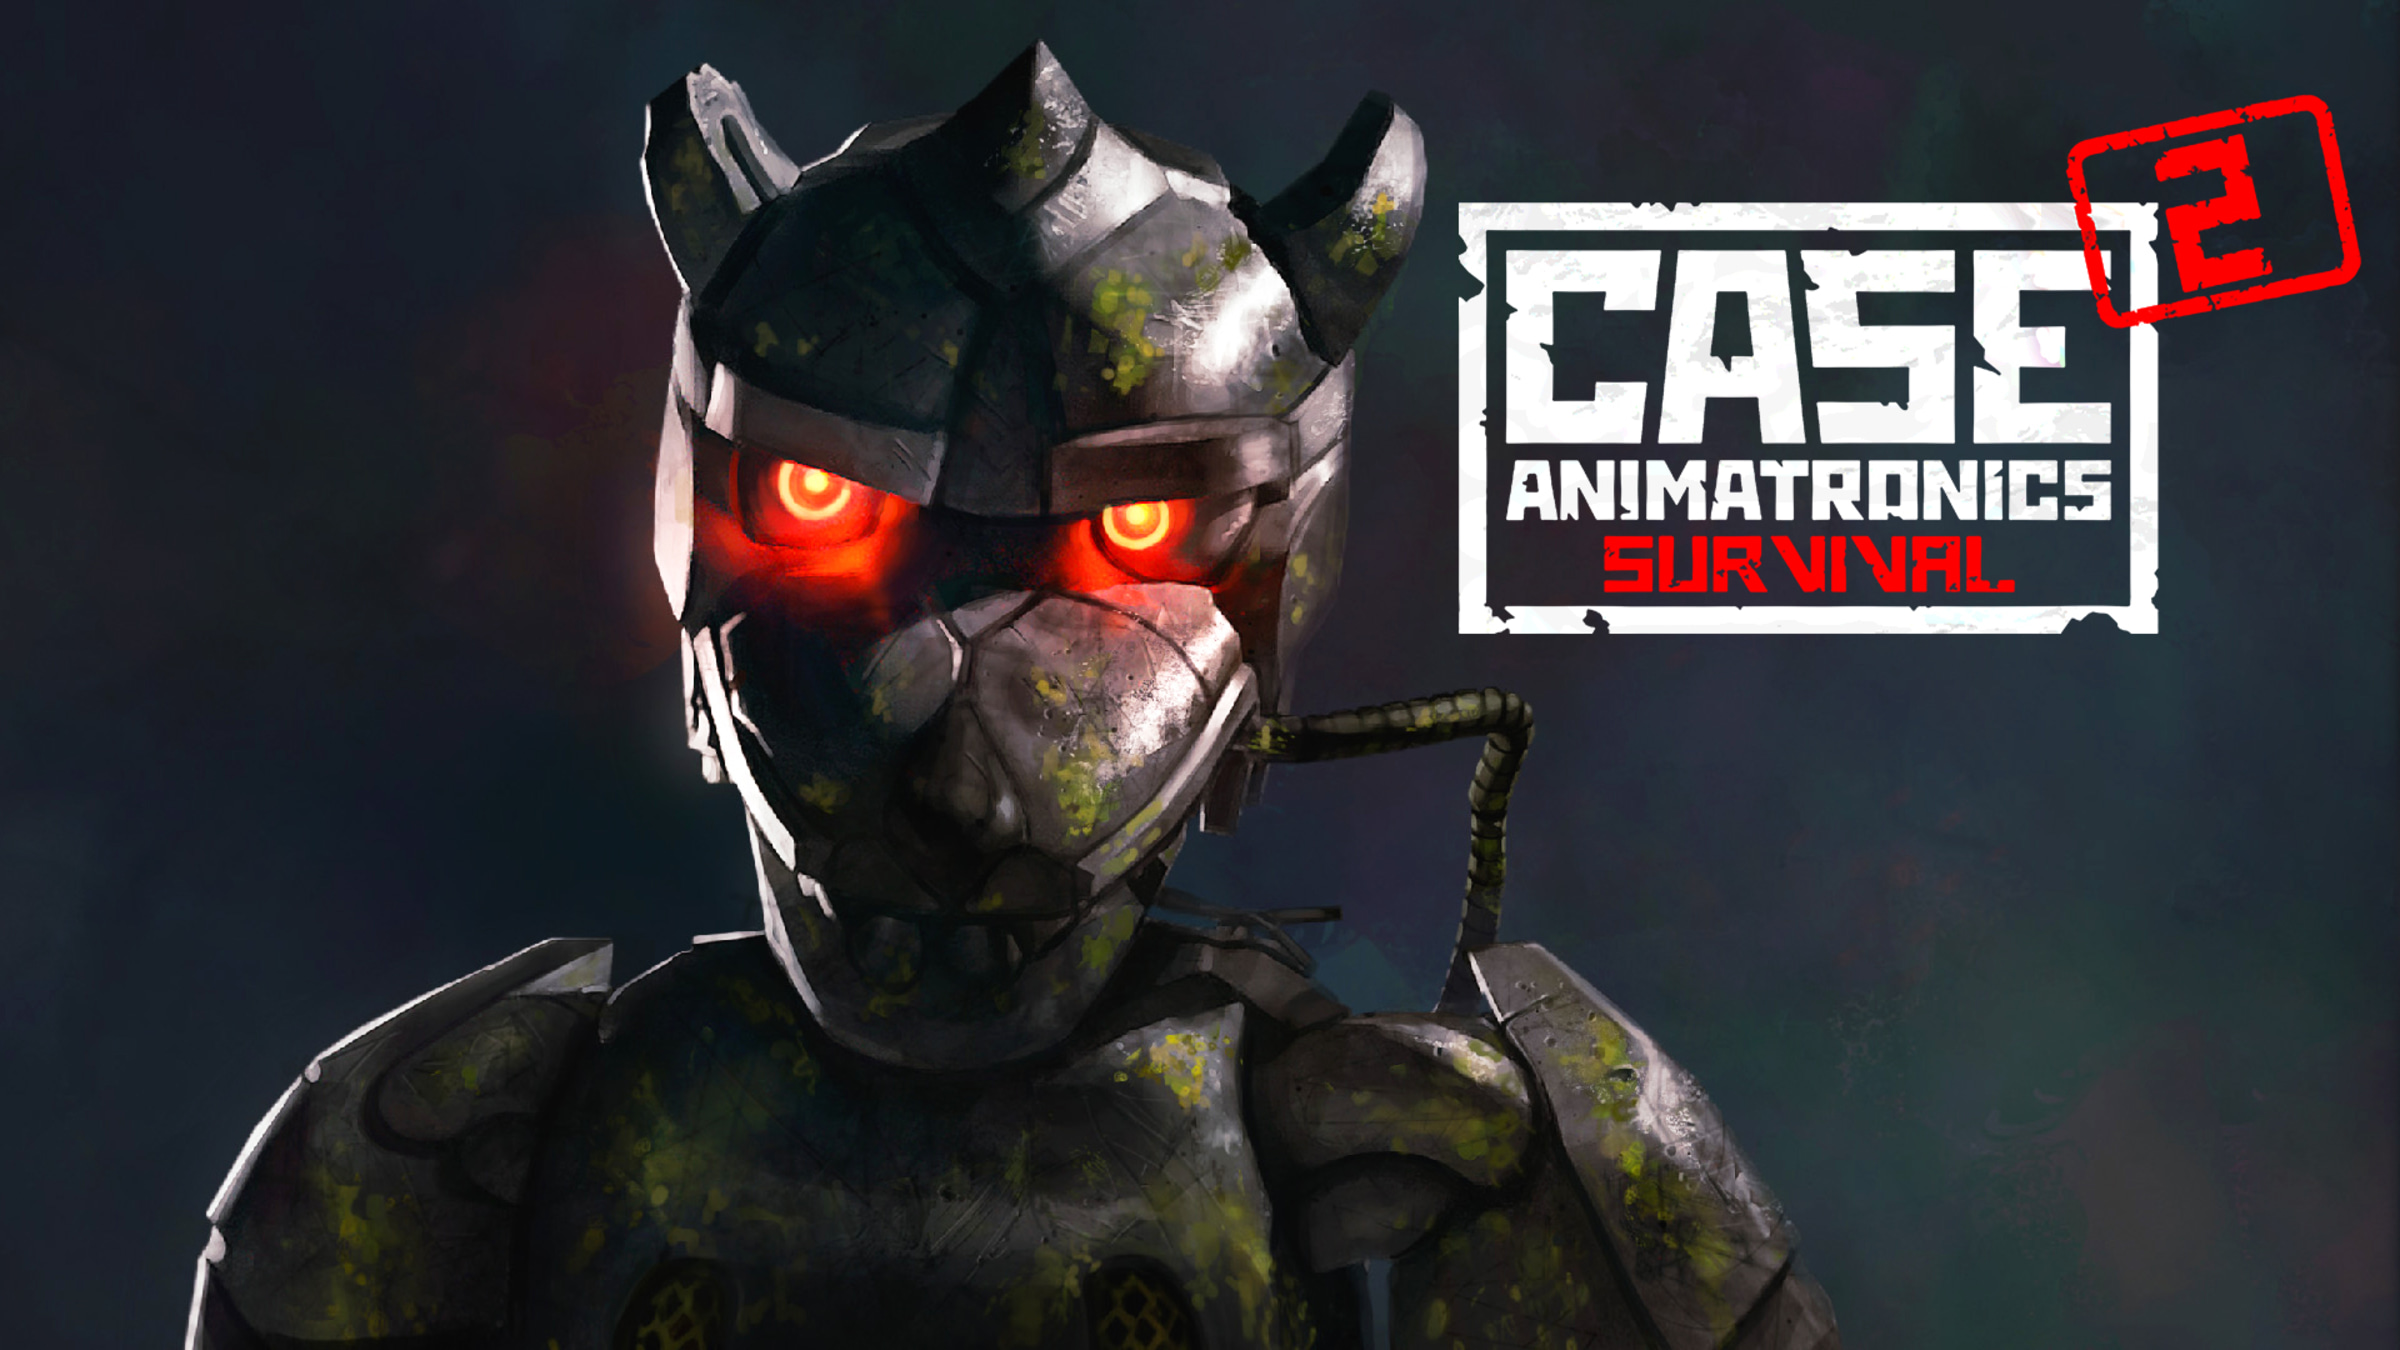 Game case 2. Кейс аниматроникс 2. Игра Case Animatronics. Кейс 2 аниматроникс сурвайвал. Case Animatronics 2 Nintendo Switch.